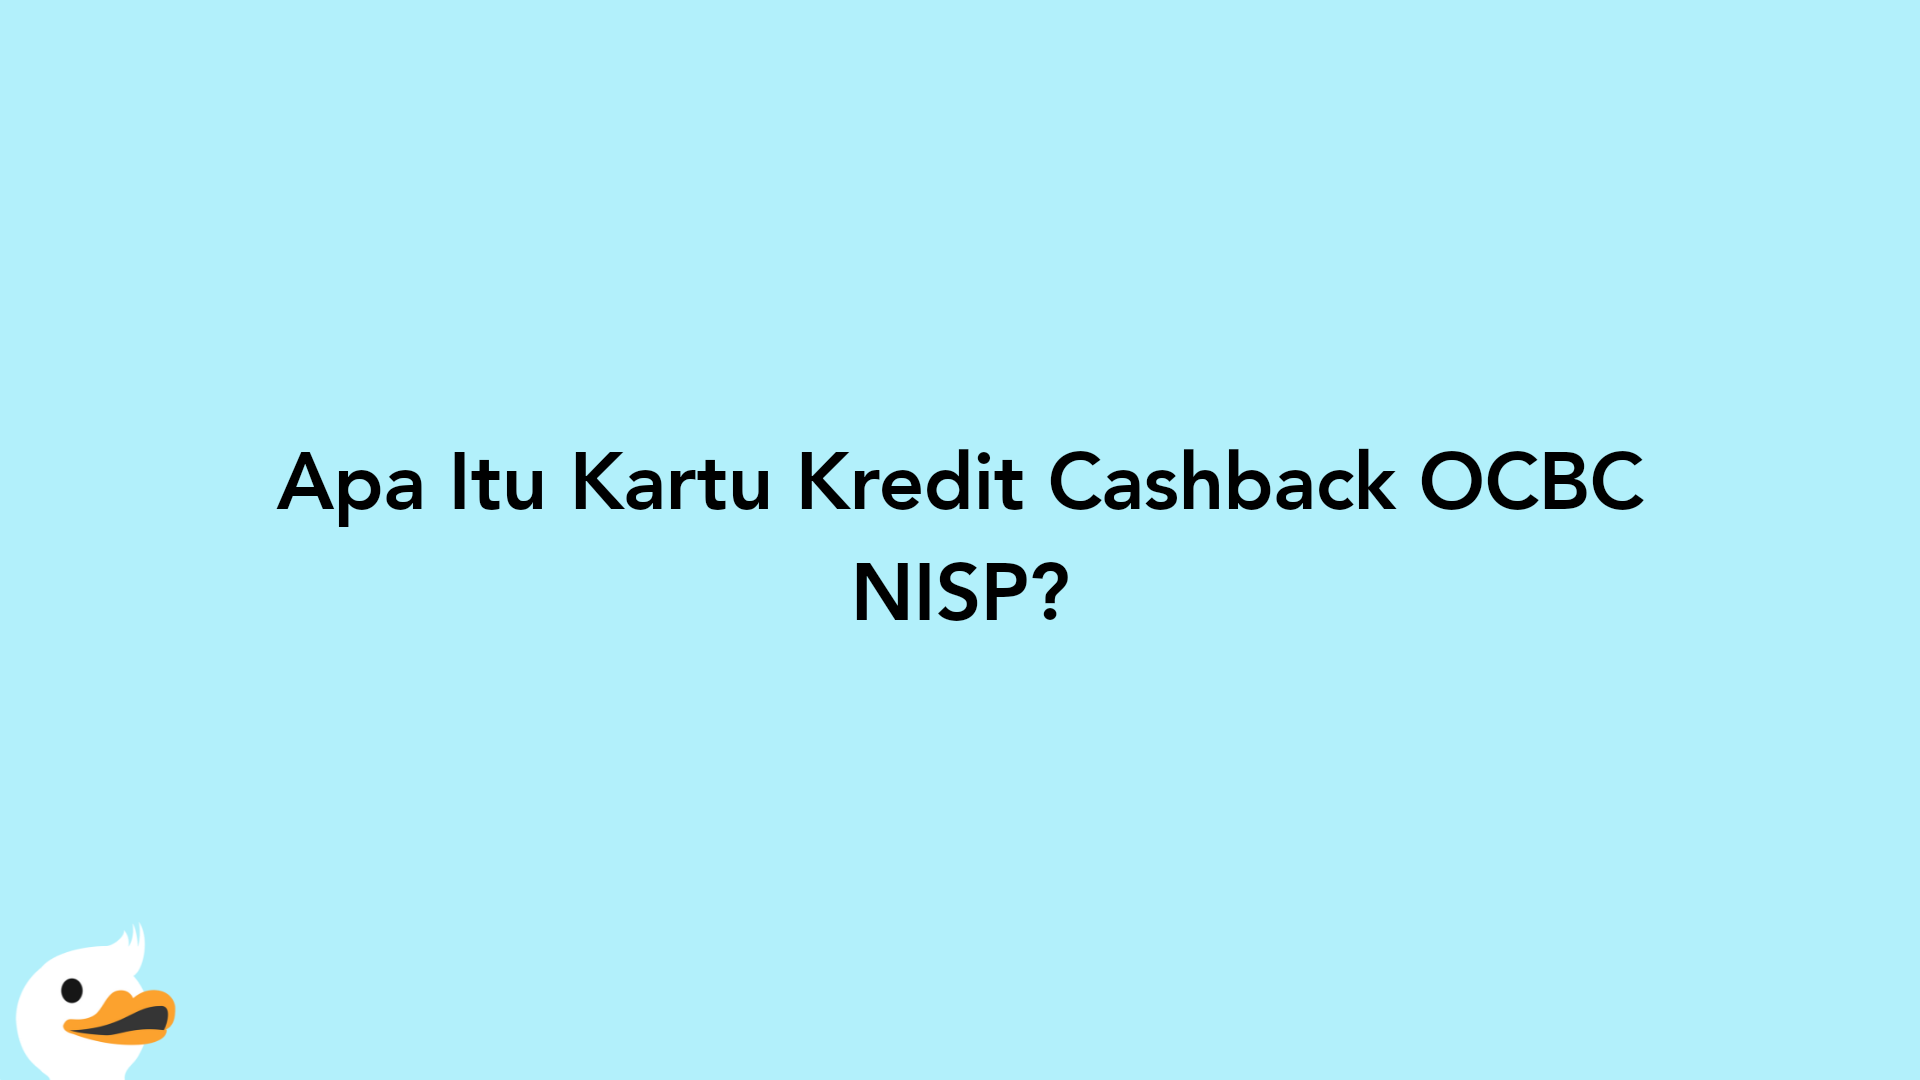 Apa Itu Kartu Kredit Cashback OCBC NISP?